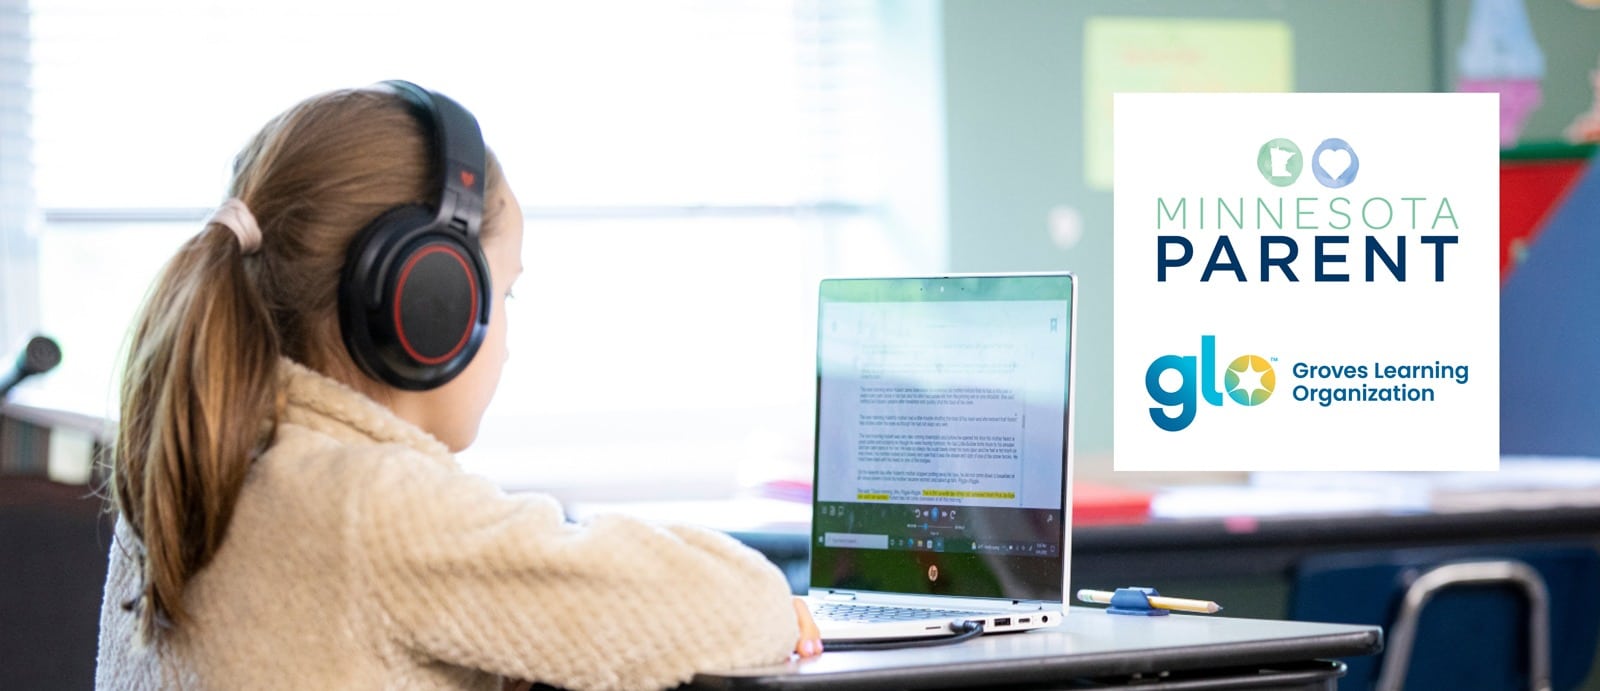 girl wearing headphones at desk looking at screen